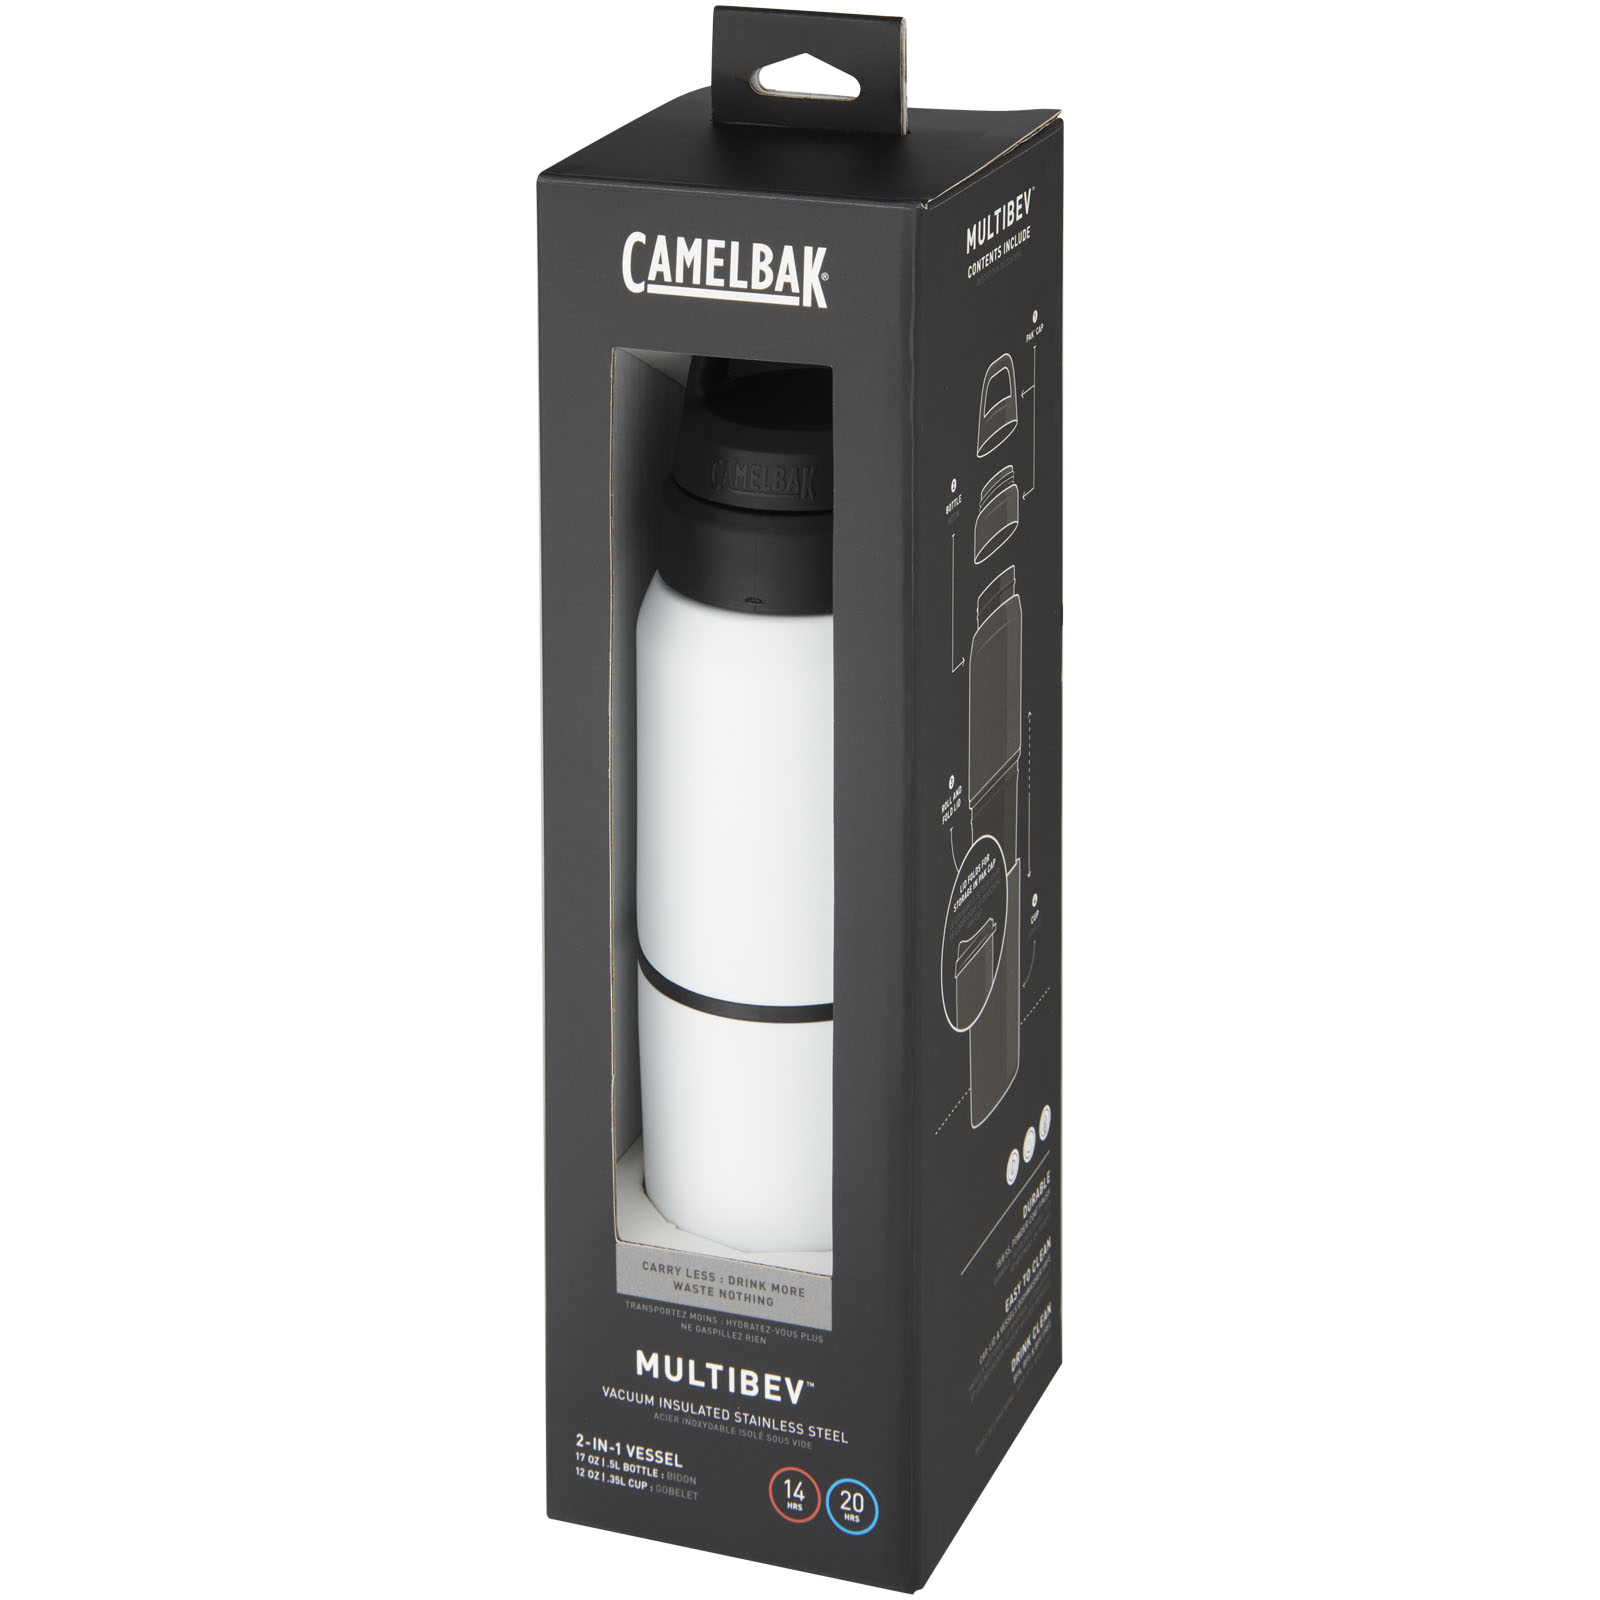 Advertising Water bottles - CamelBak® MultiBev vacuum insulated stainless steel 500 ml bottle and 350 ml cup - 1